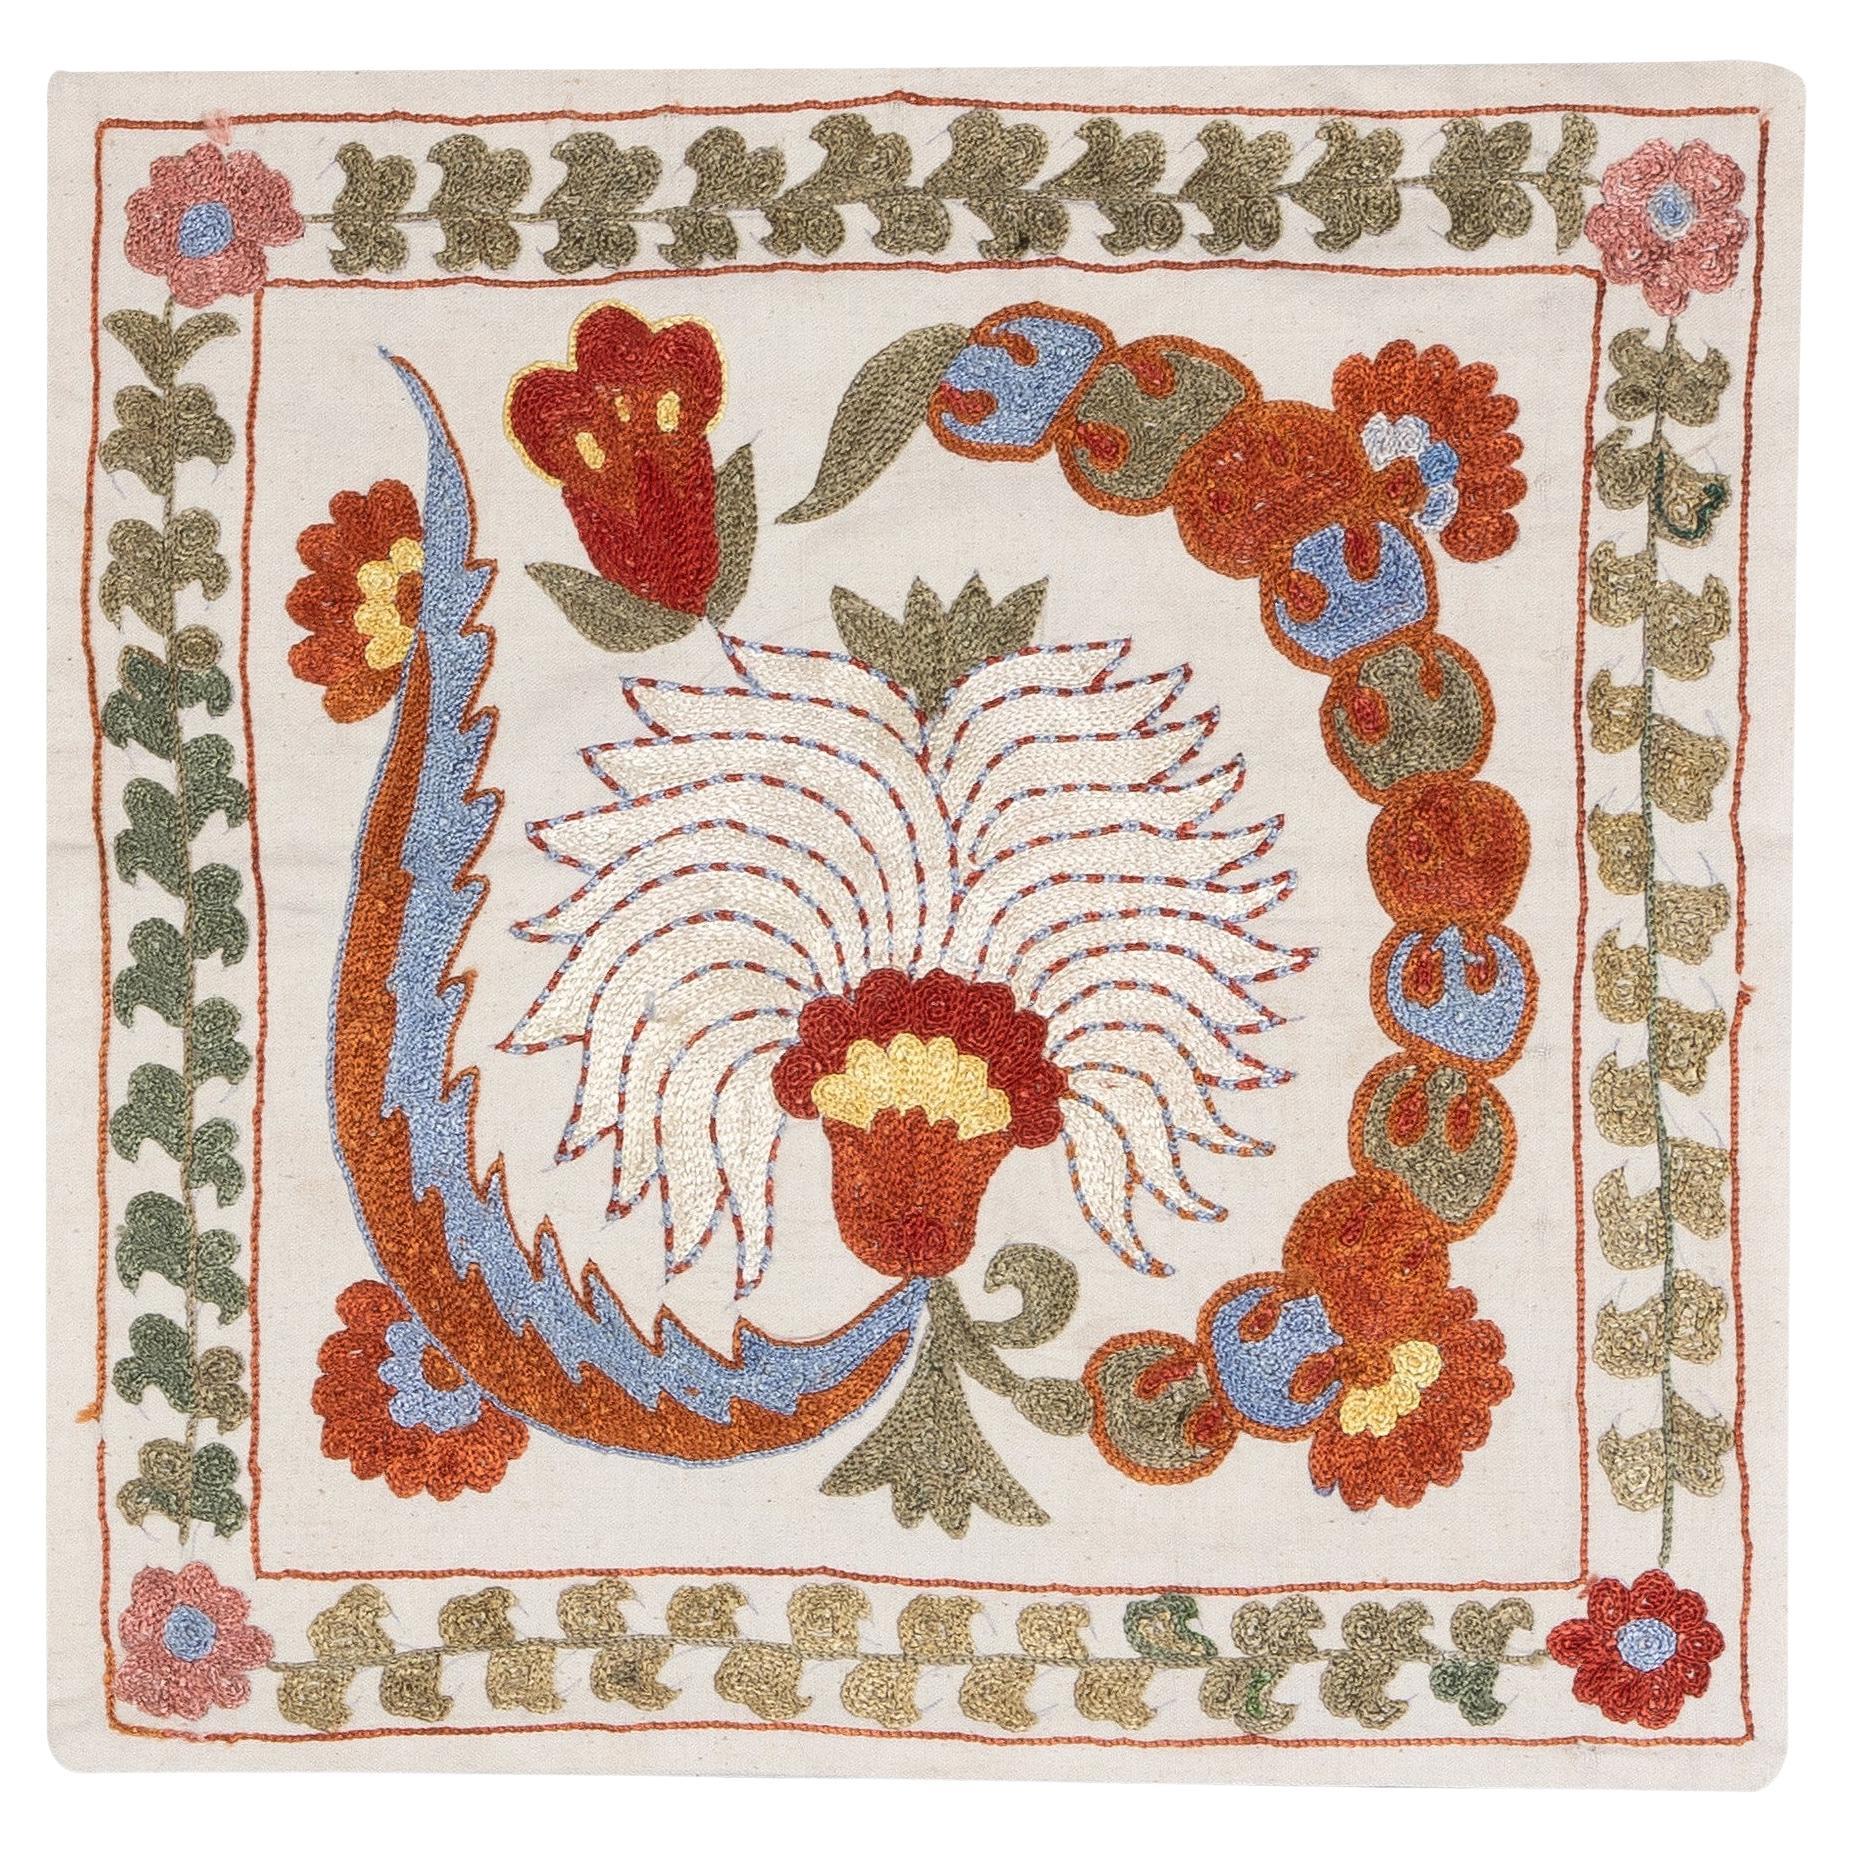 New Multicolor Silk Embroidered Suzani Cushion Cover from Uzbekistan